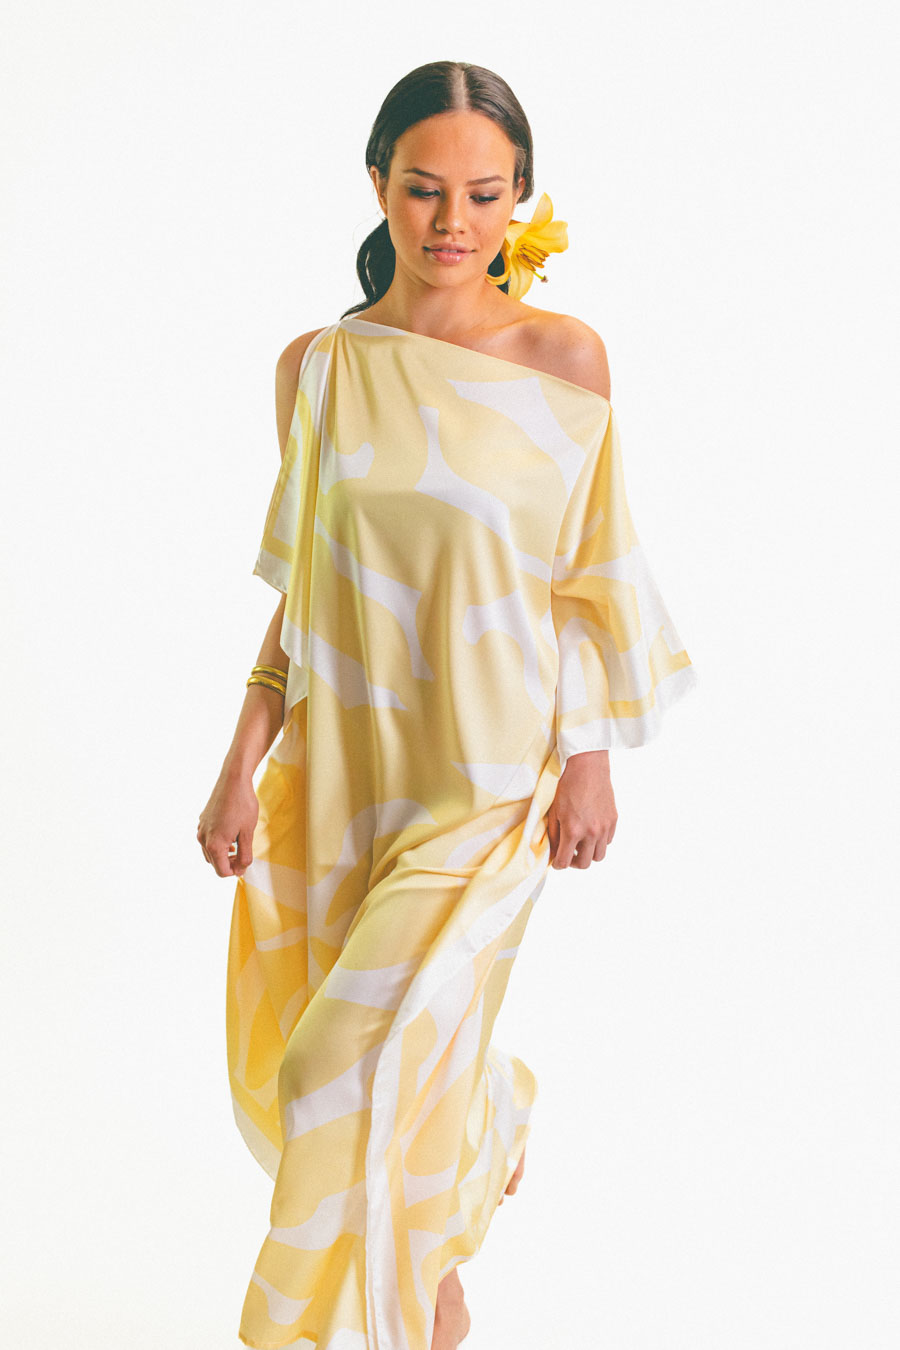 Aimata Tahiti Collection Wardrobe Dress Tehere White Beige